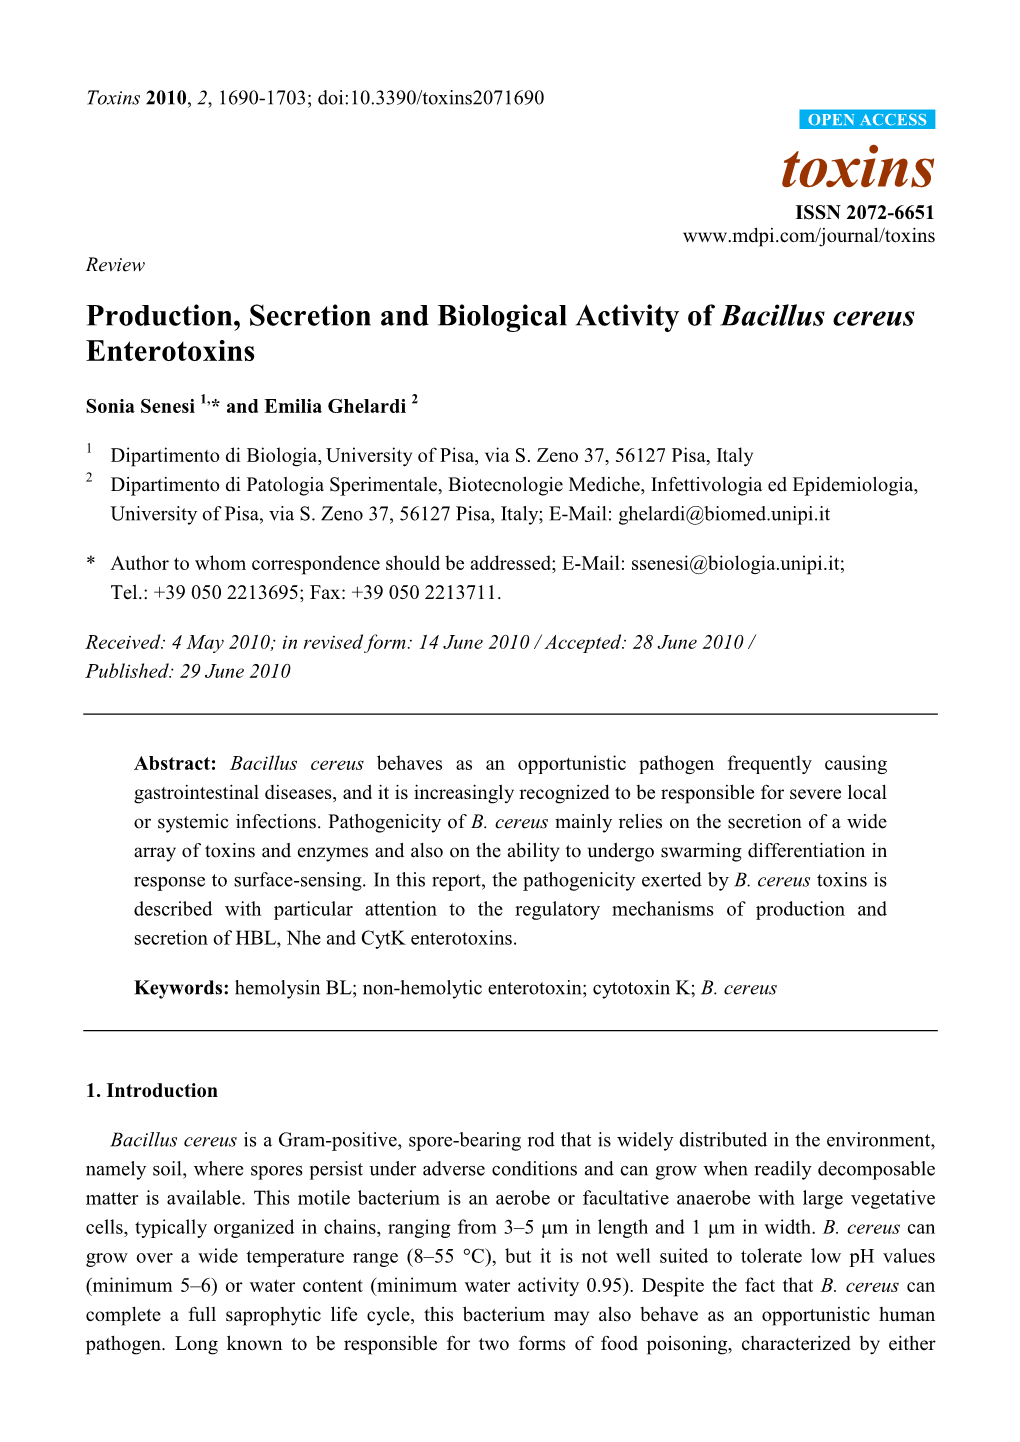 Production, Secretion and Biological Activity of Bacillus Cereus Enterotoxins